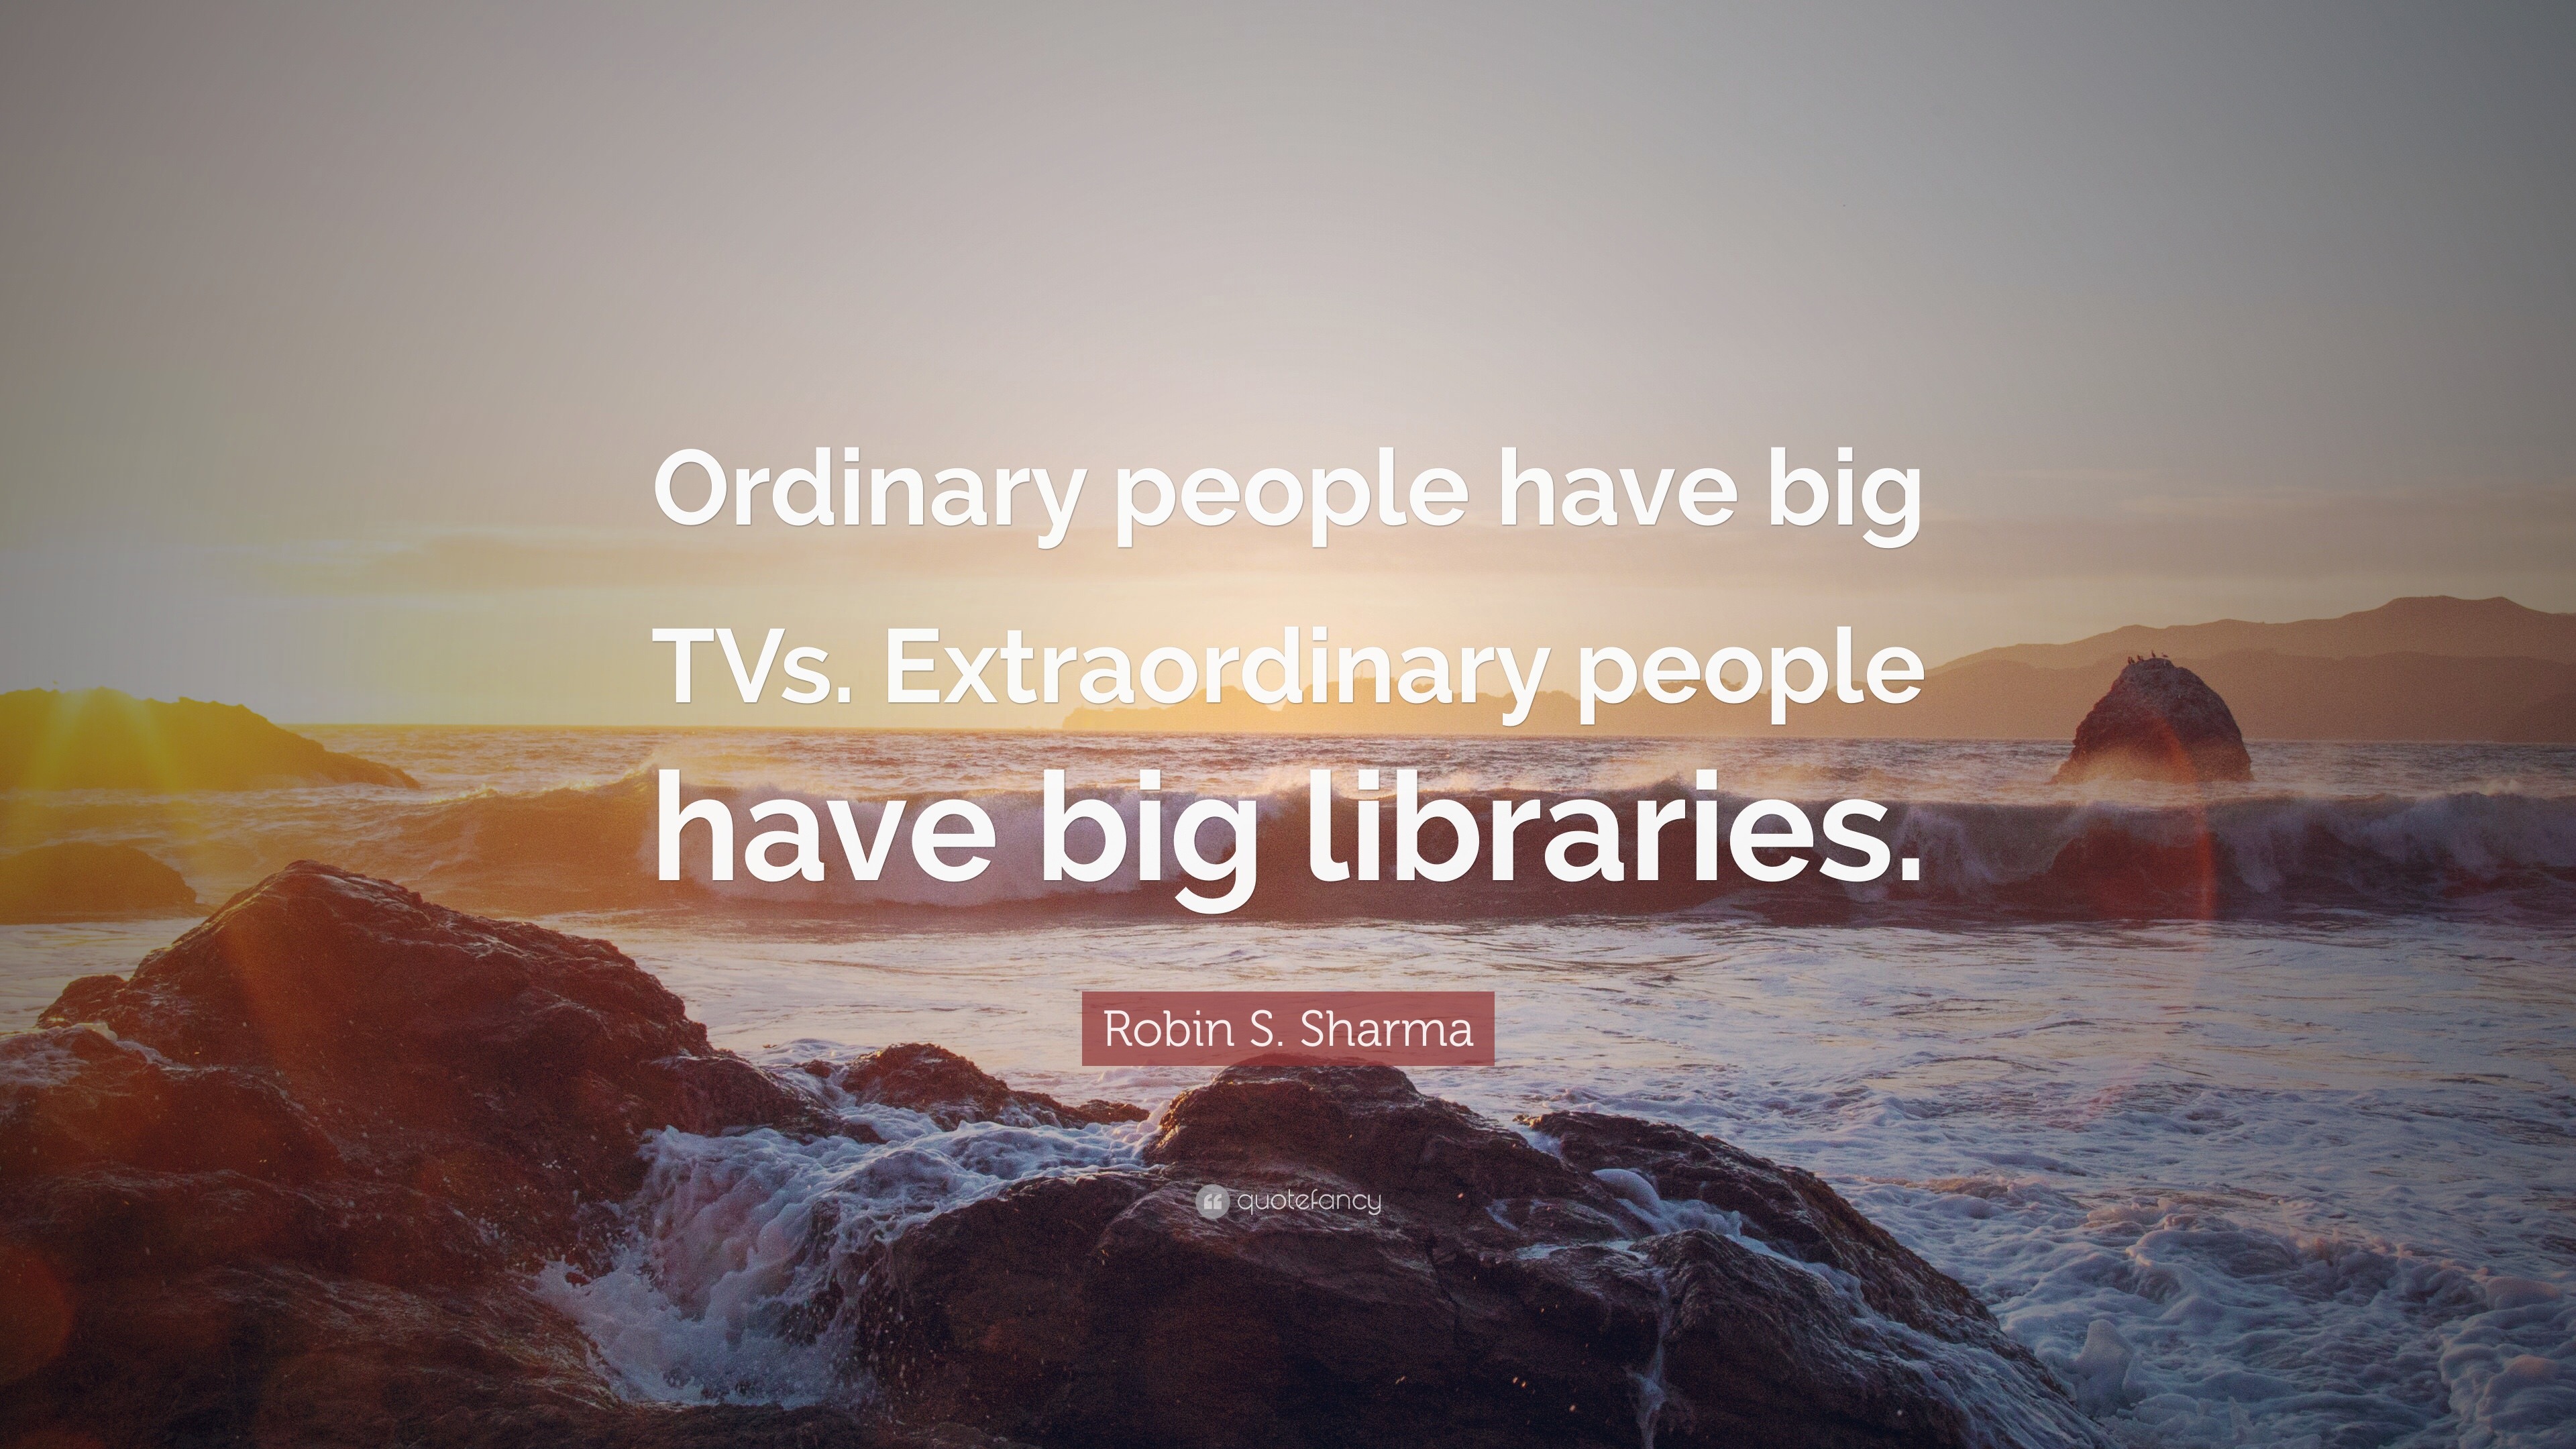 Robin S. Sharma Quote: “Ordinary people have big TVs. Extraordinary people  have big libraries.”